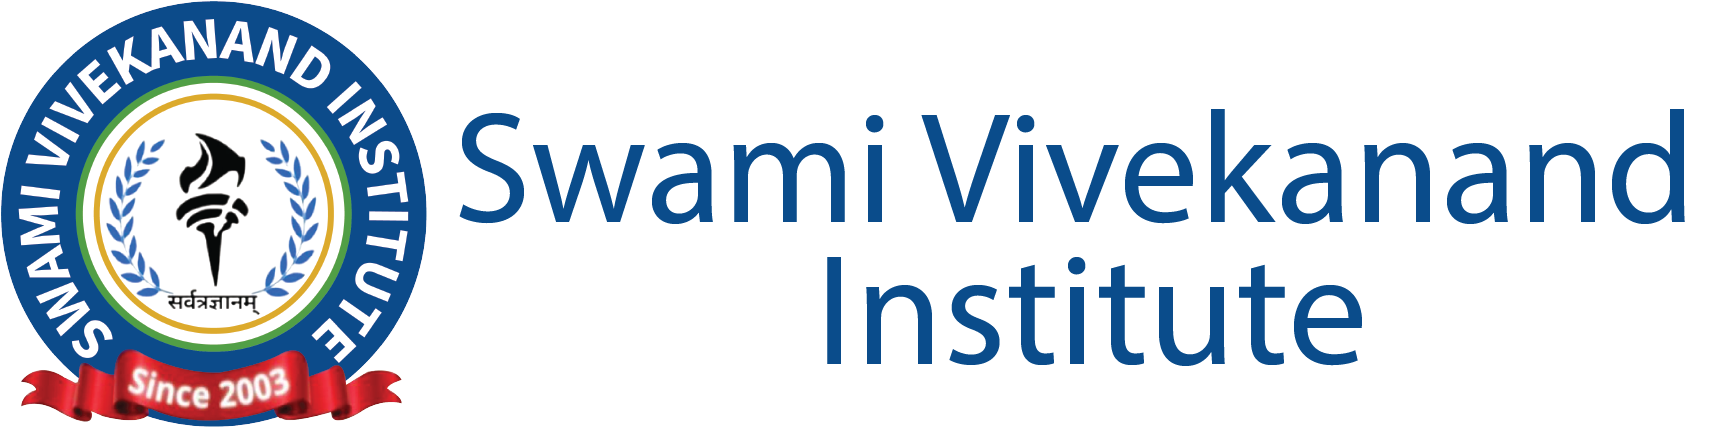 swami vivekanand institute logo